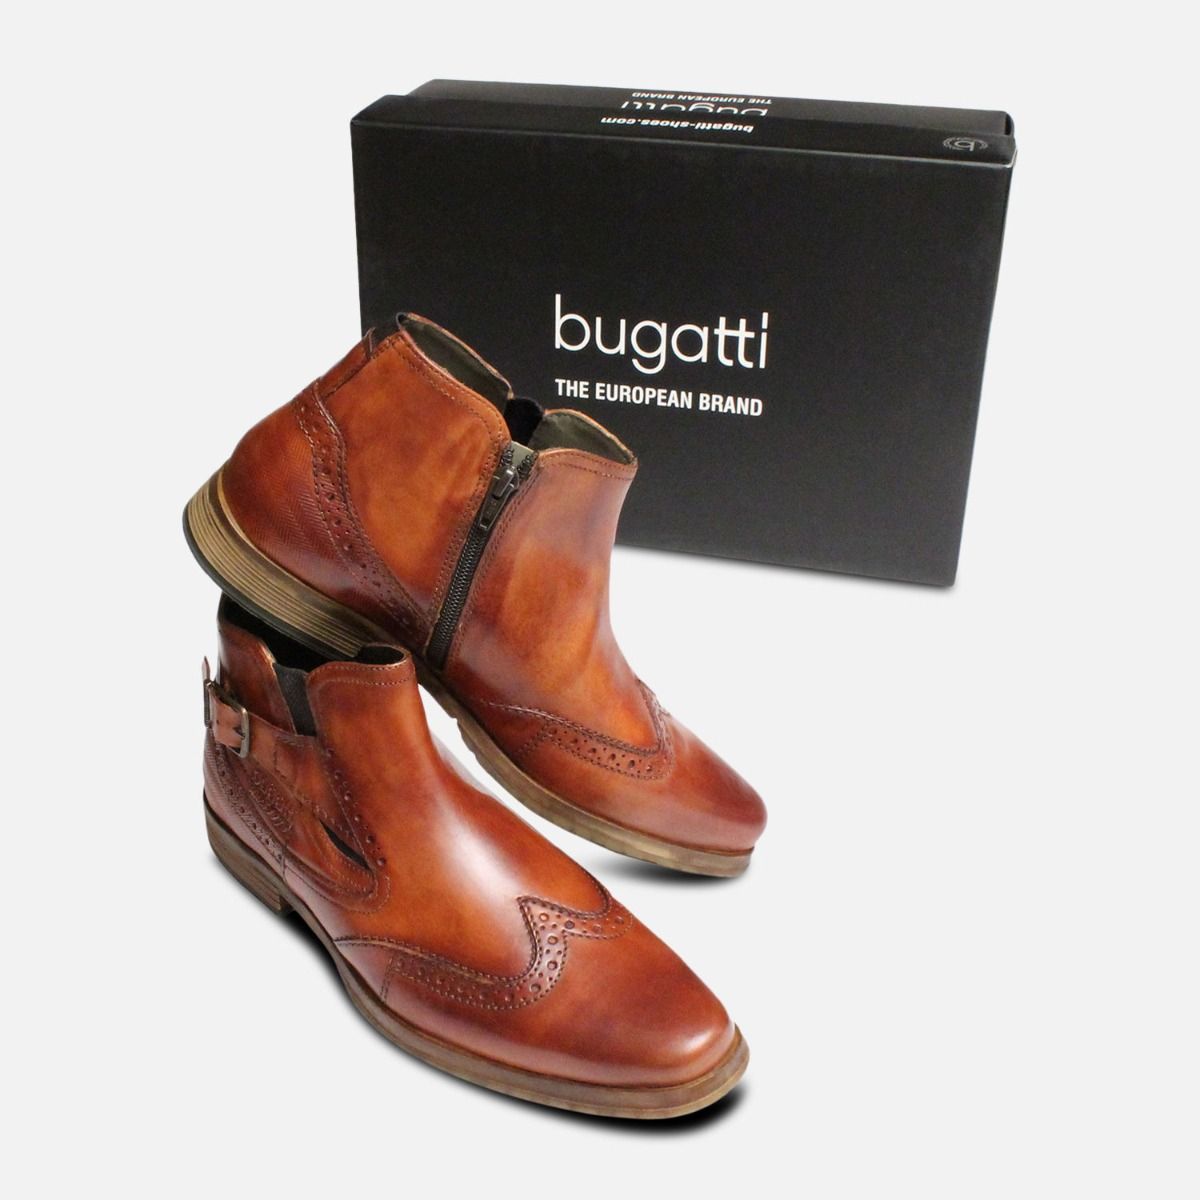 bugatti brand shoes